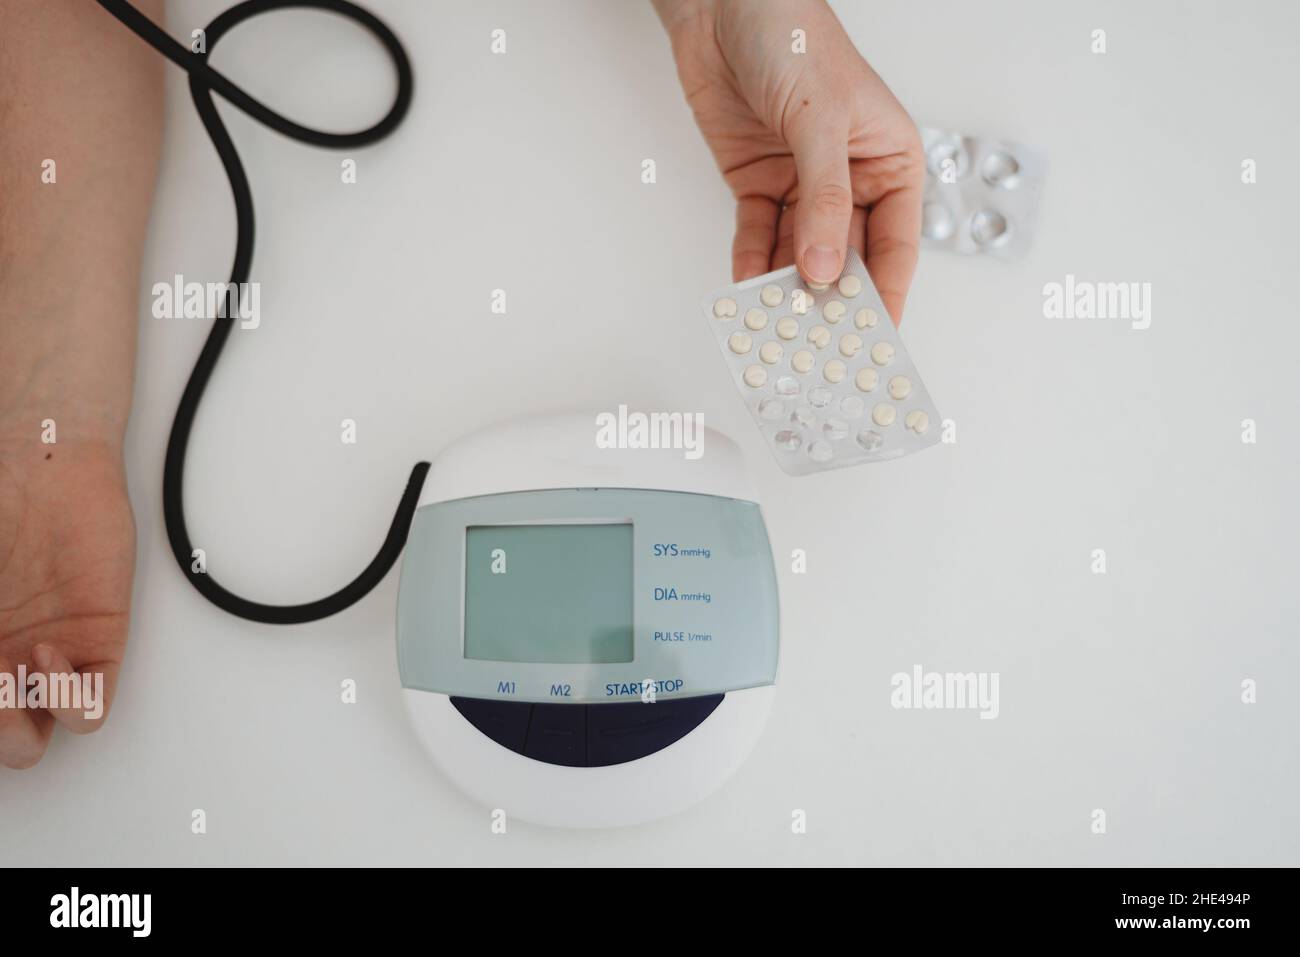 digital sphygmomanometer, medical device for measuring blood pressure Stock Photo